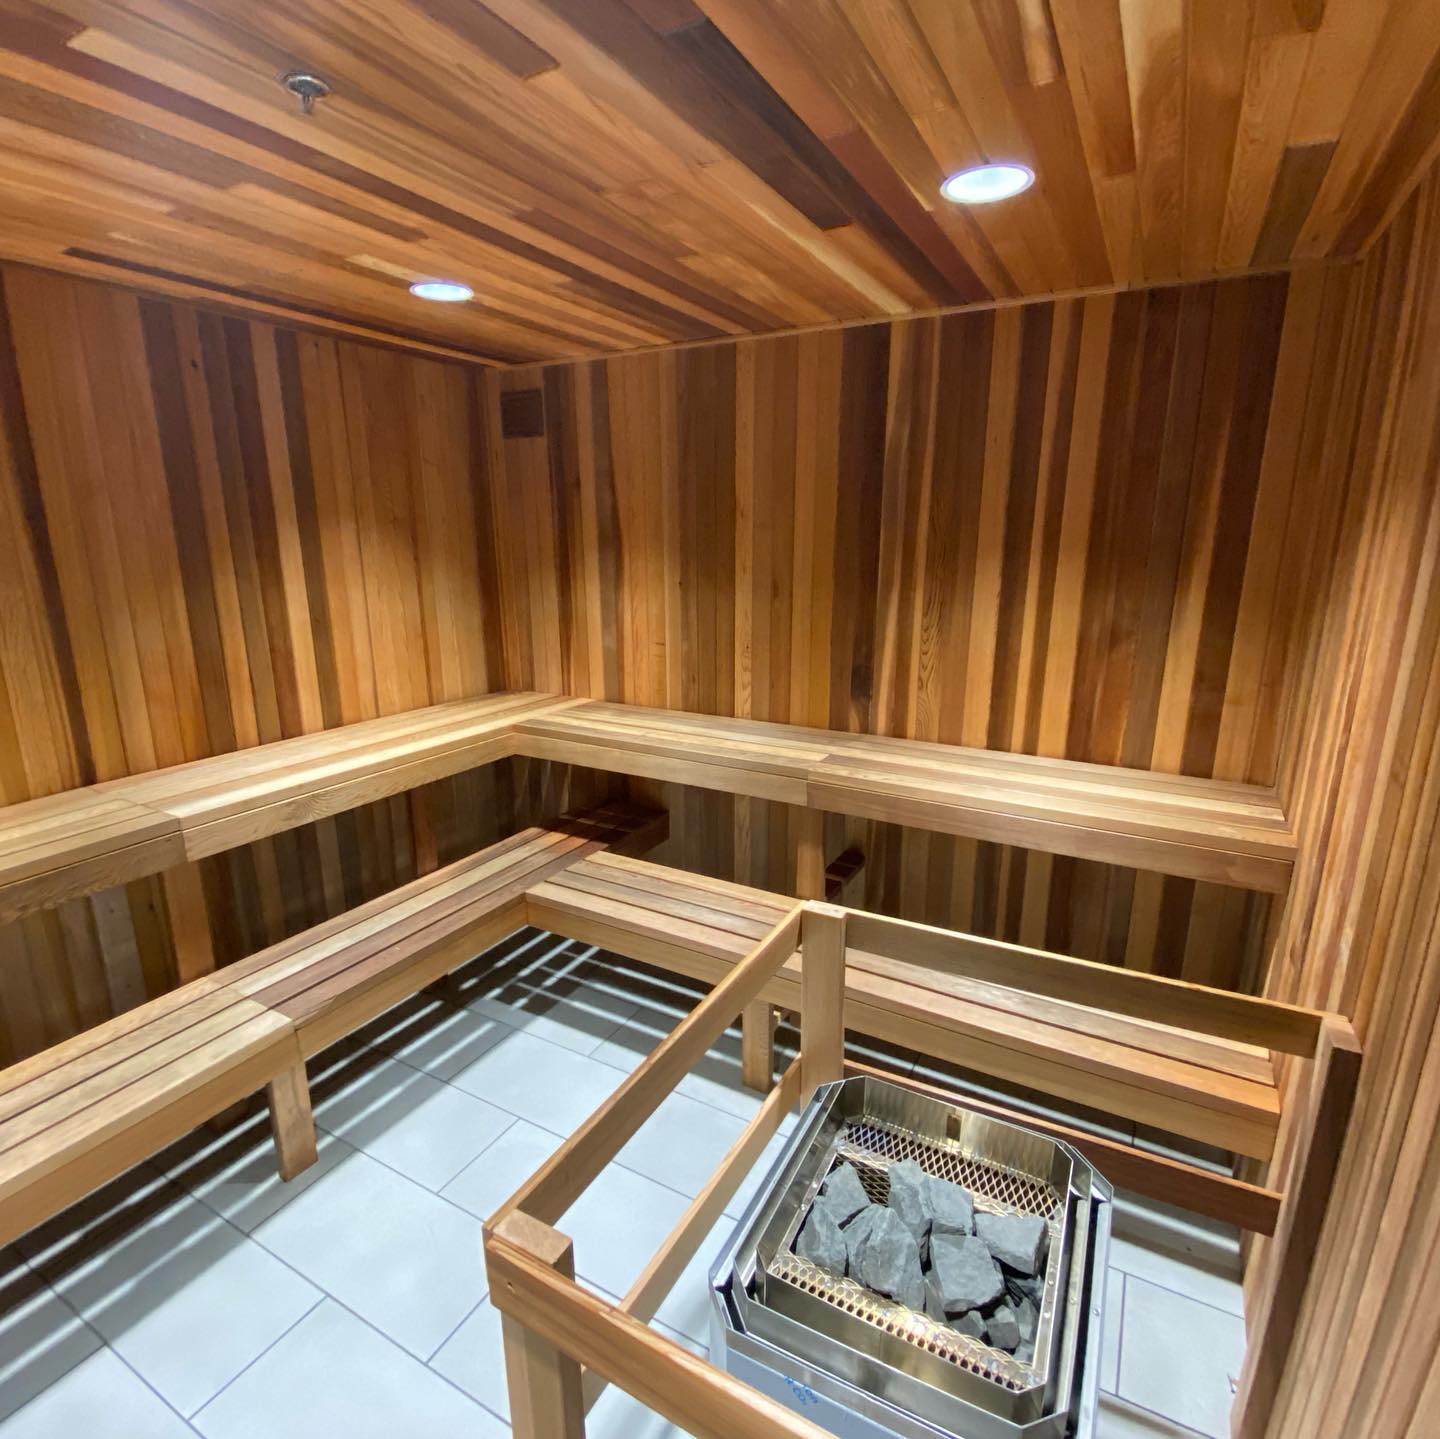 A sauna room at Crunch Fitness.